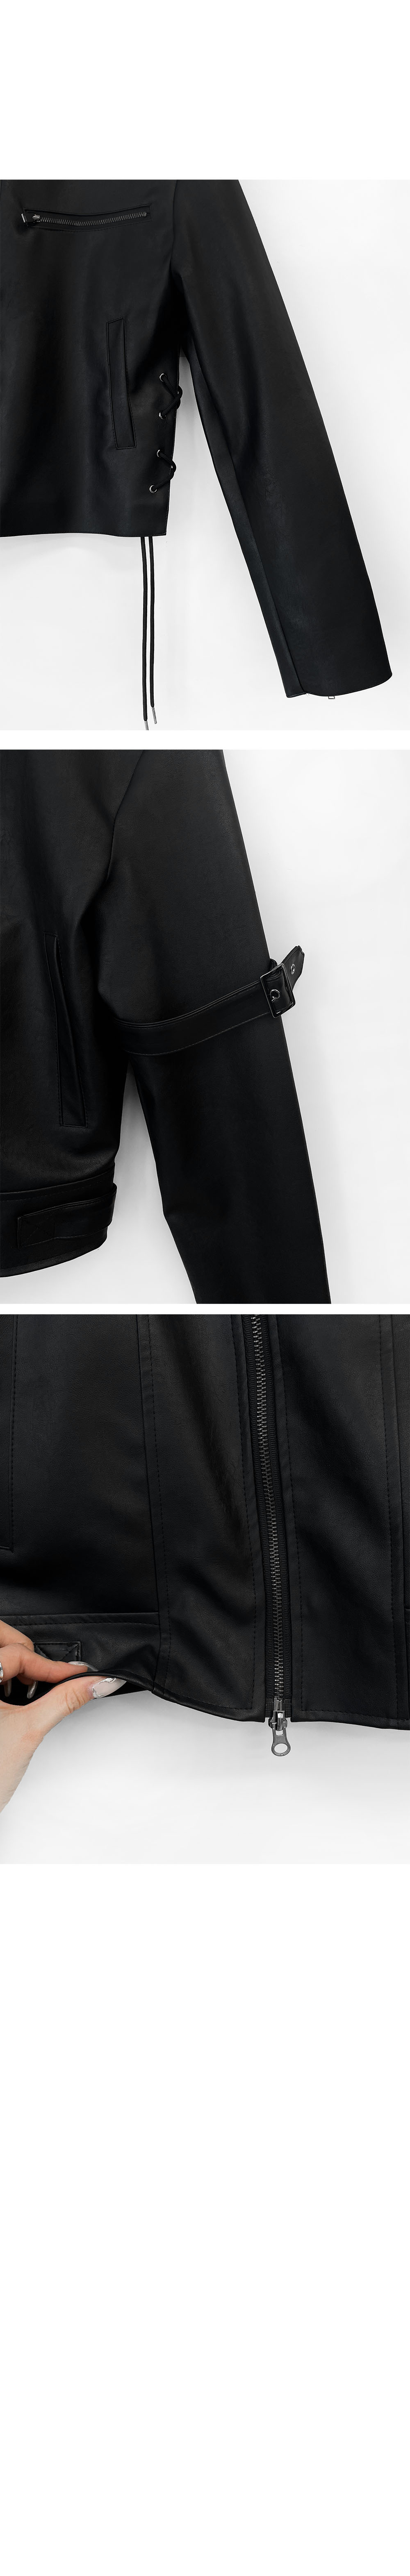 Jacket detail image-S1L11